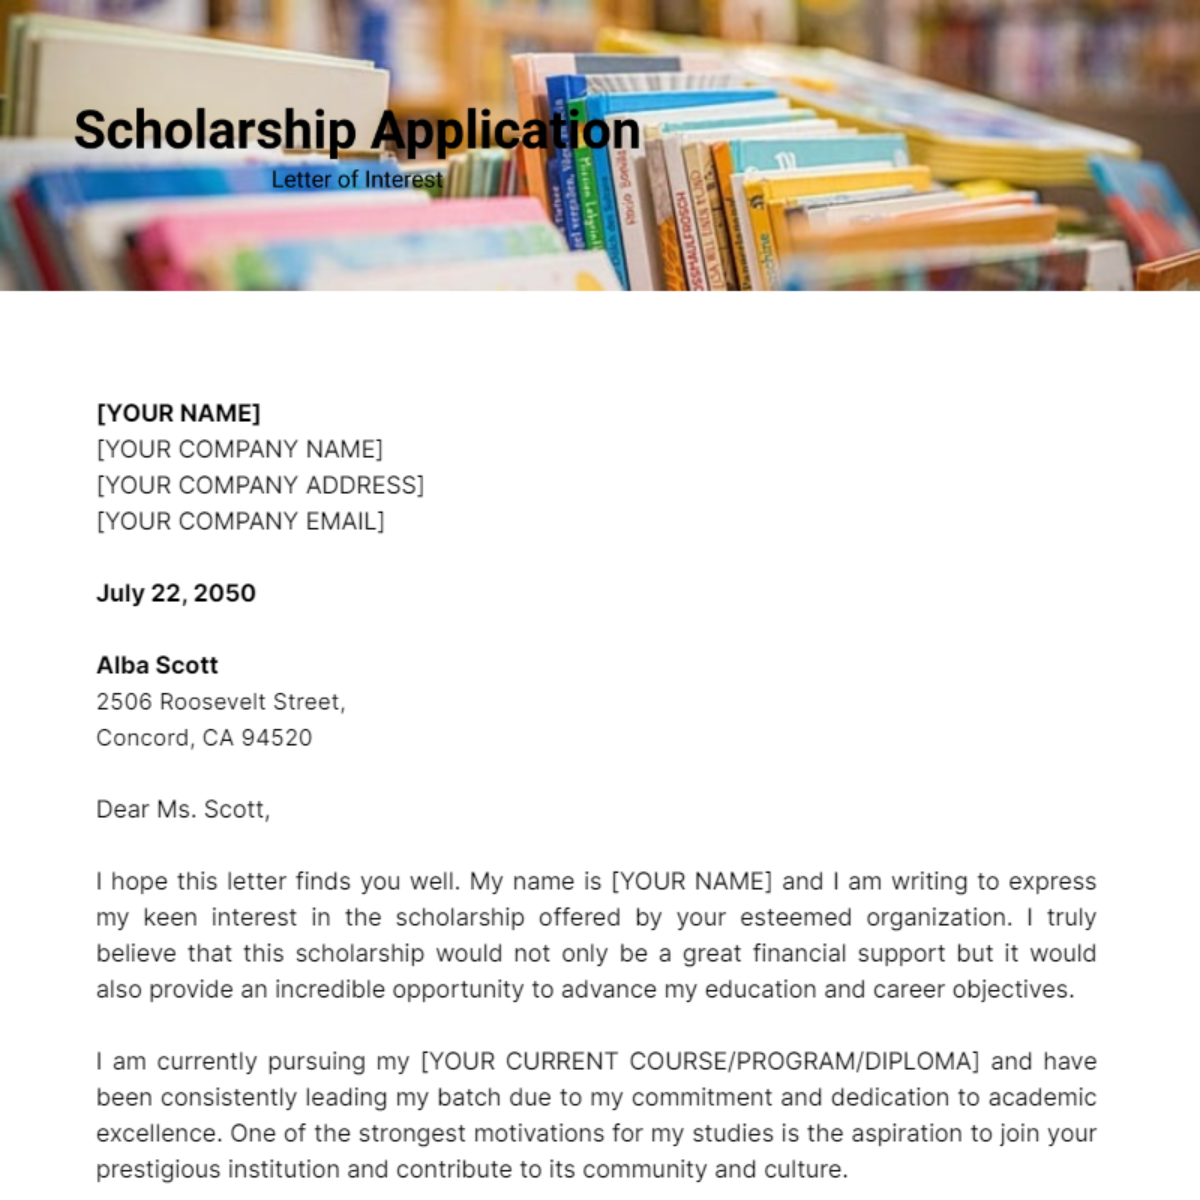 Scholarship Application Letter of Interest Template